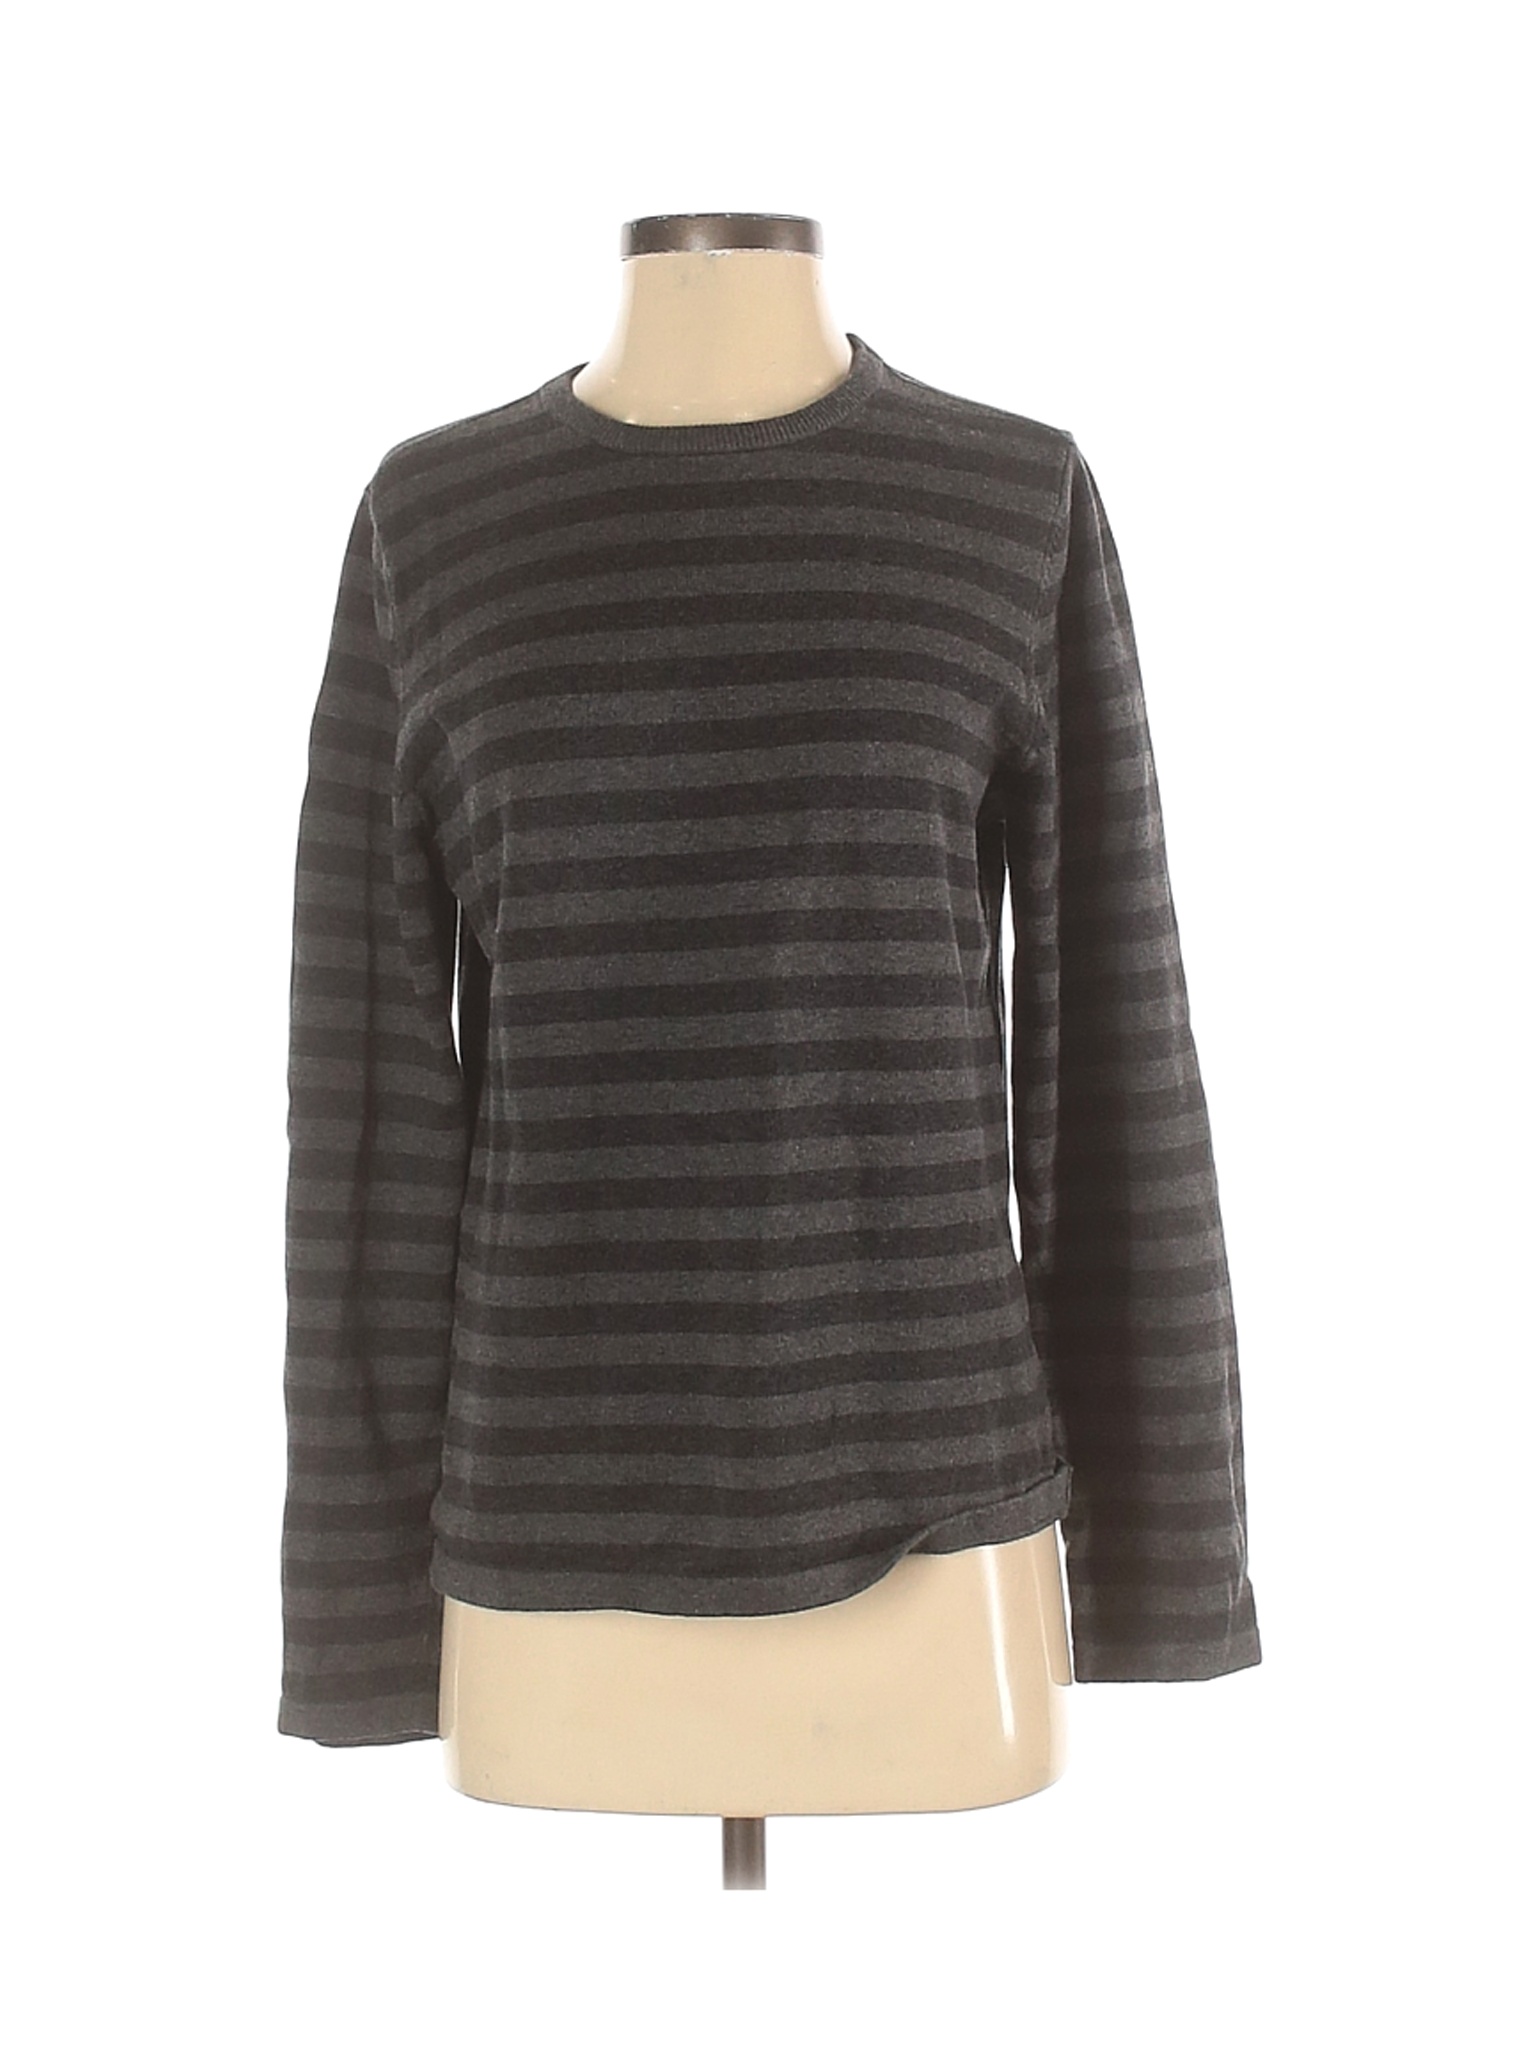 Merona Women Gray Pullover Sweater S | eBay